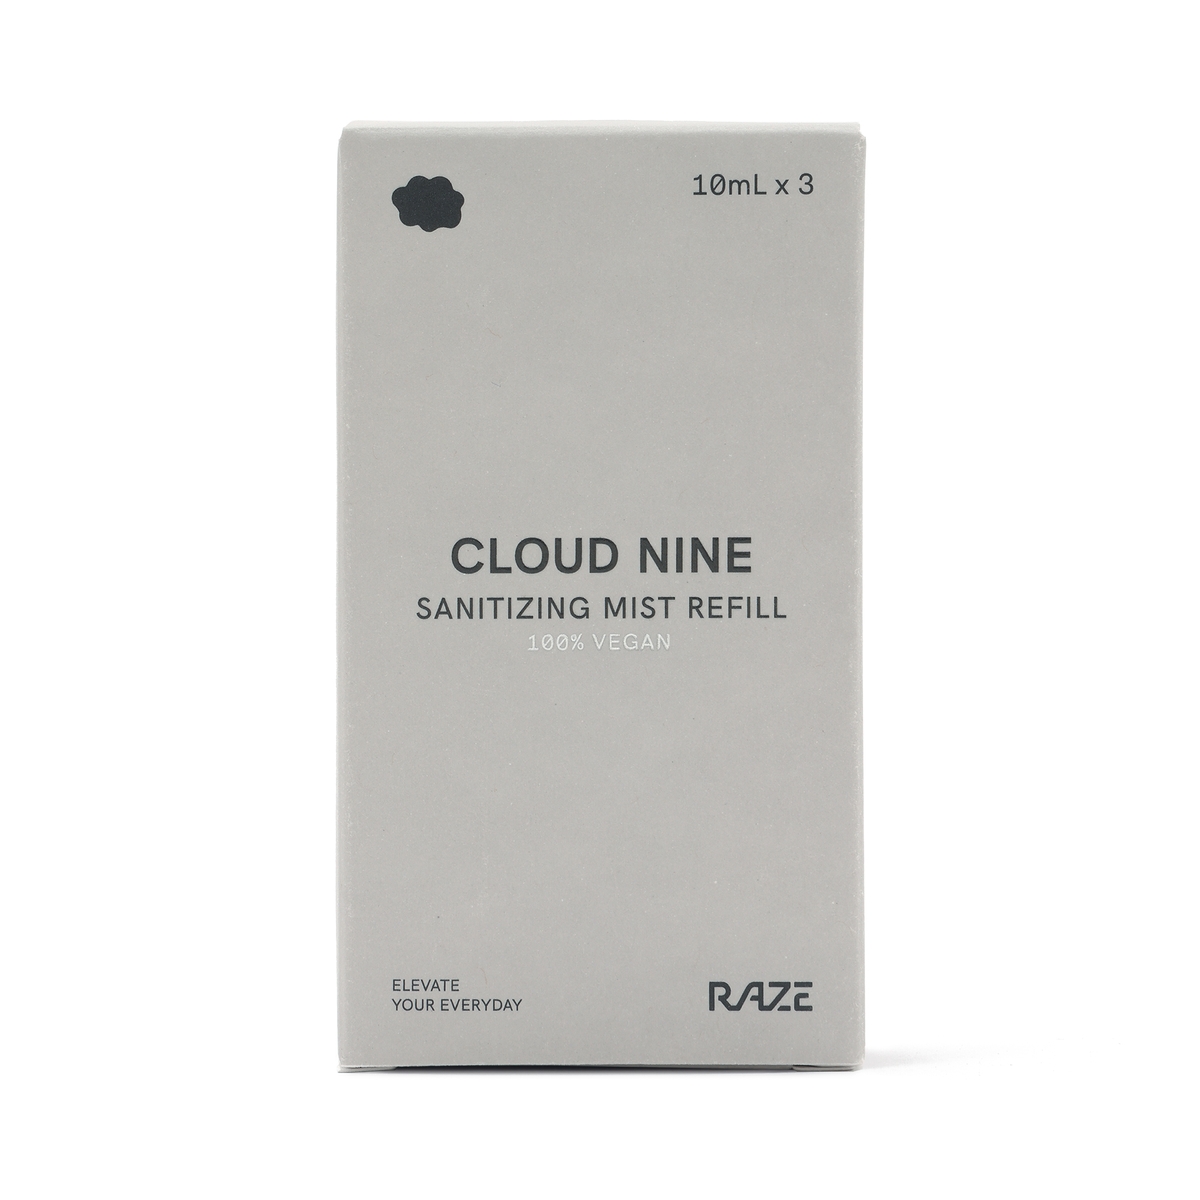 Cloud Nine Sanitizing Mist Refill 10mLx3